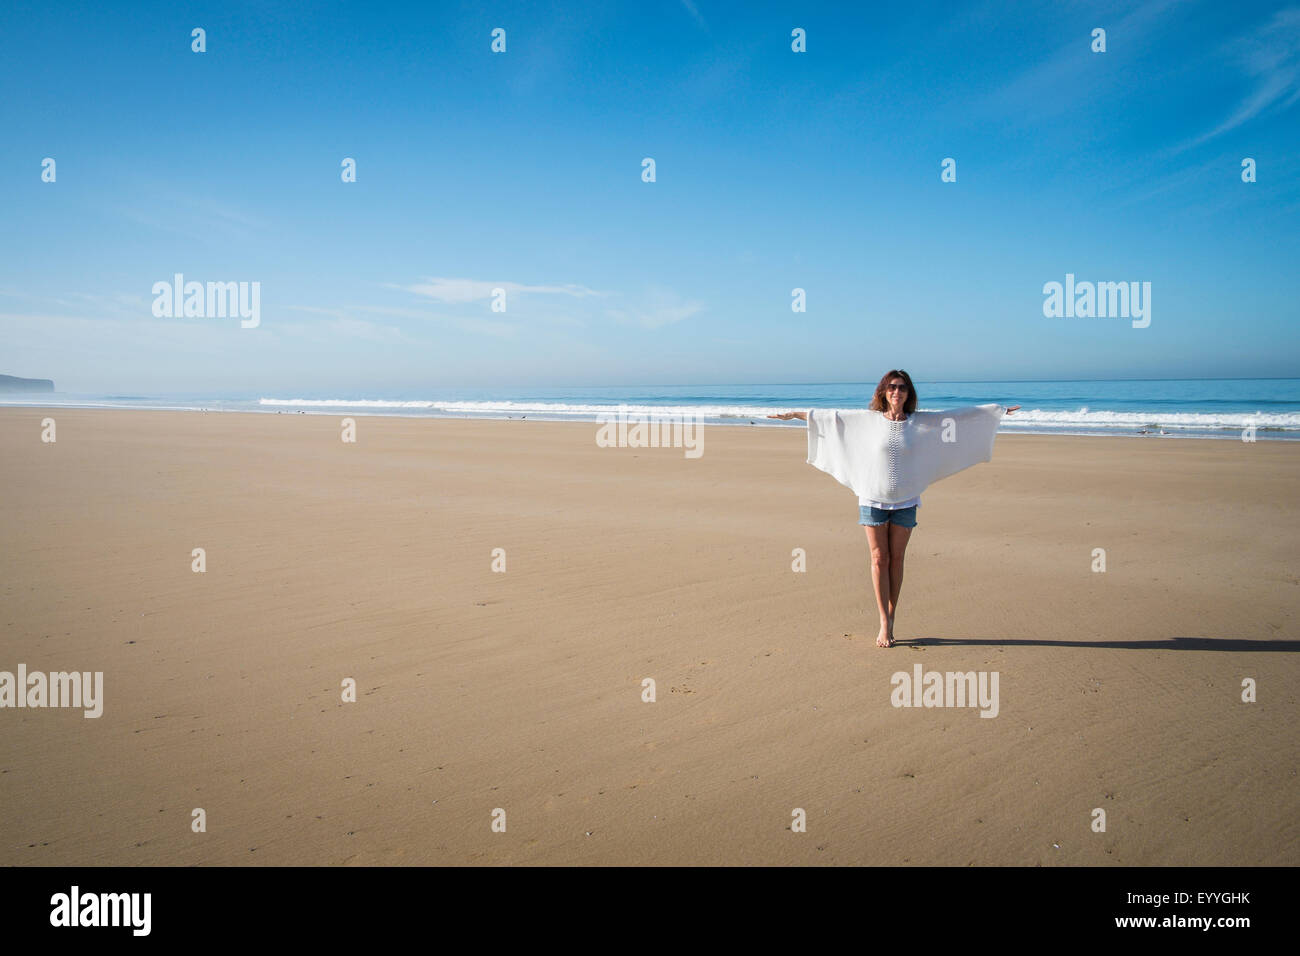 Caucasian woman walking on beach under blue sky Stock Photo